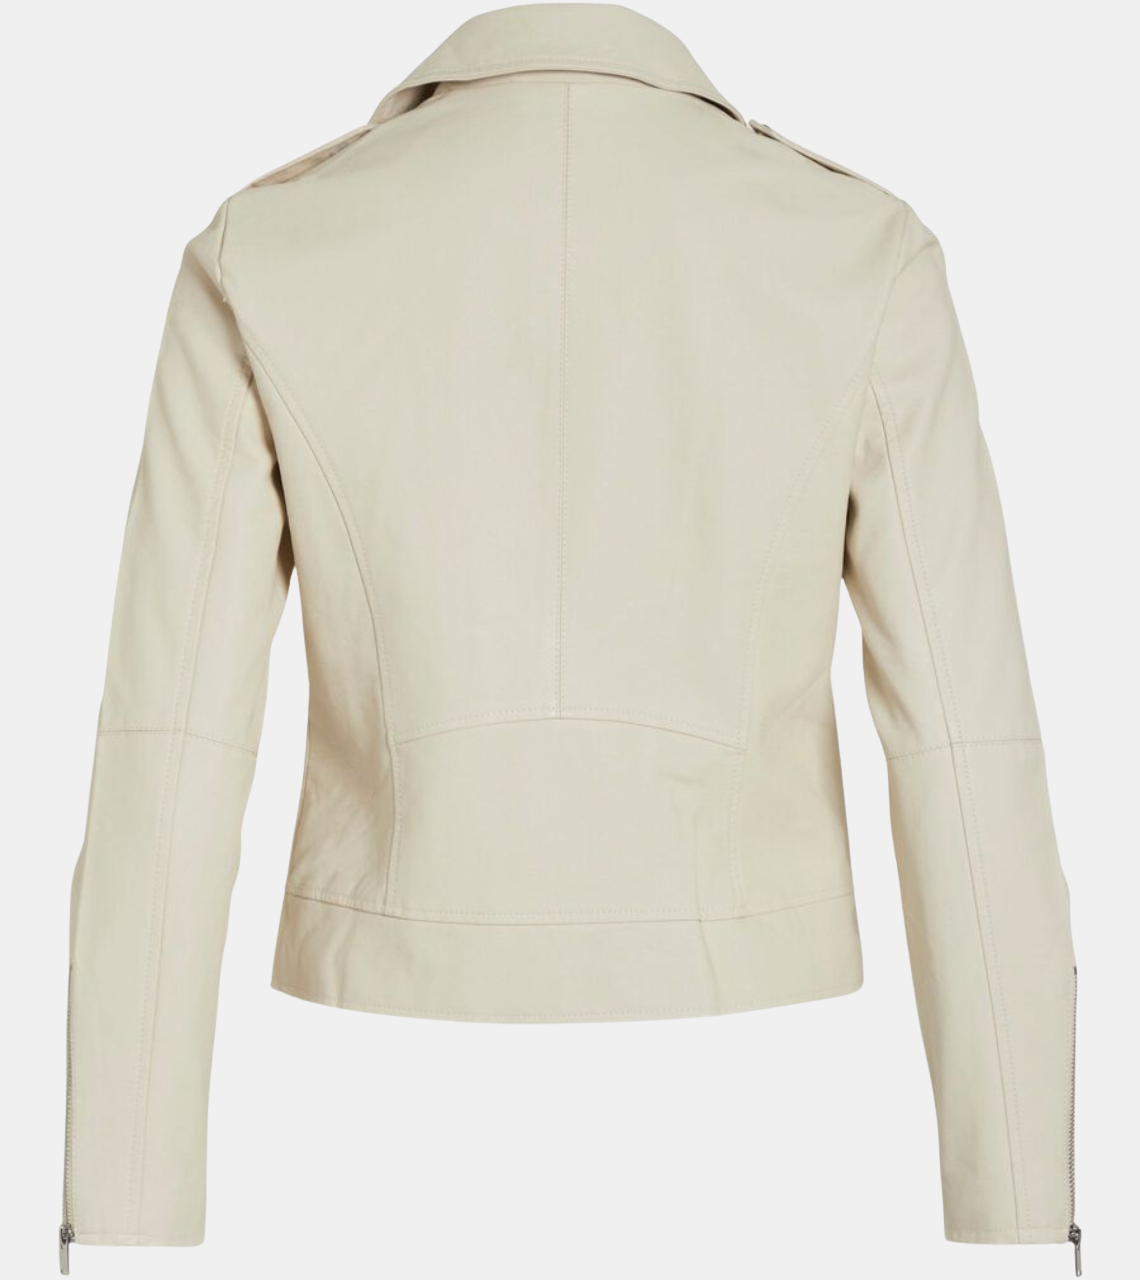 Charlene Birch White Leather Jacket